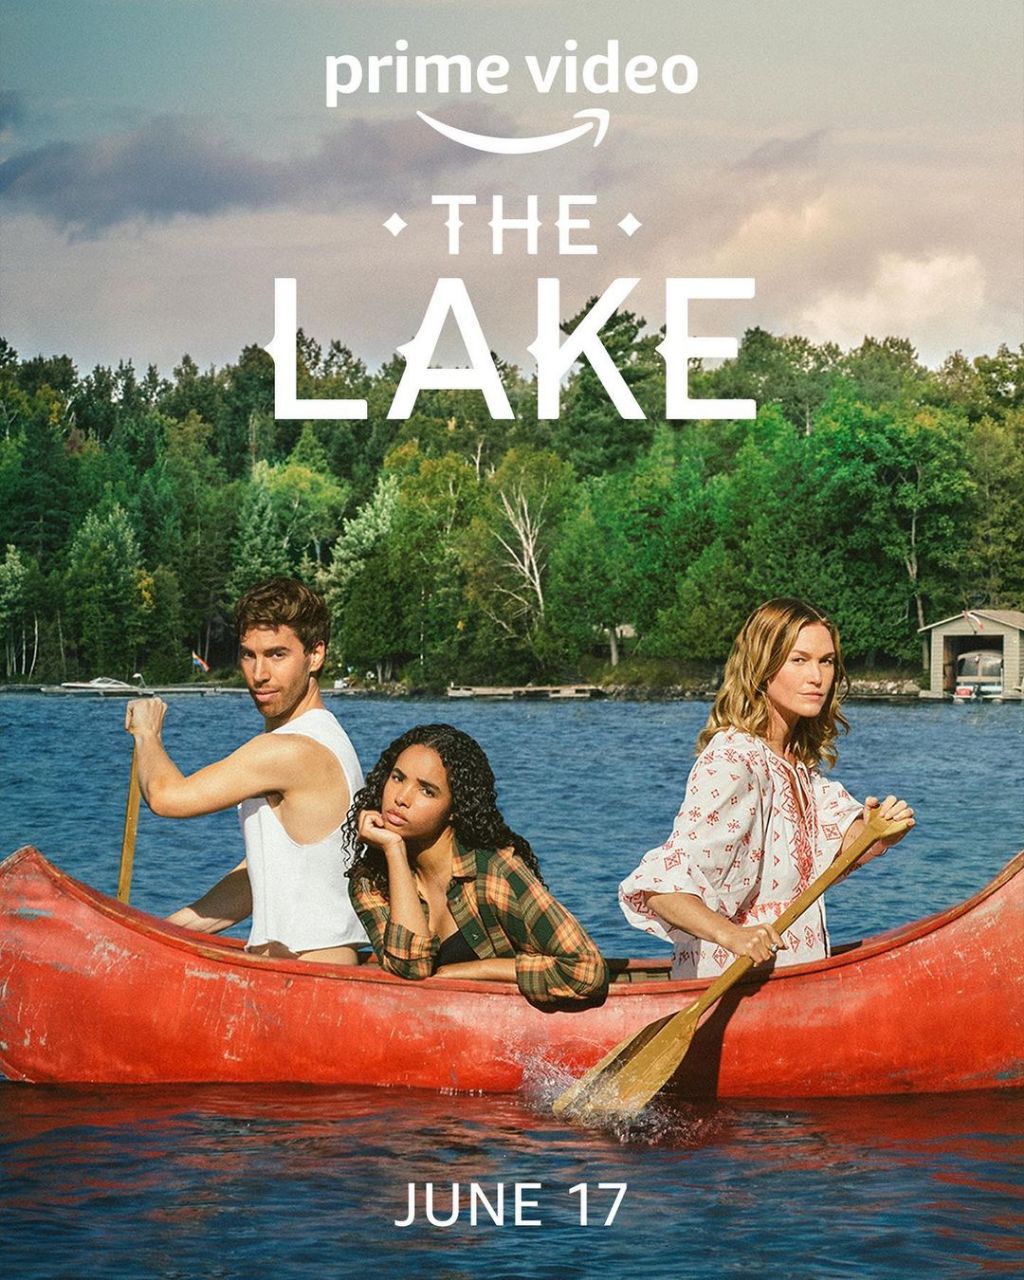 The lake amazon prime video web series season 1 download in Hindi English 2022